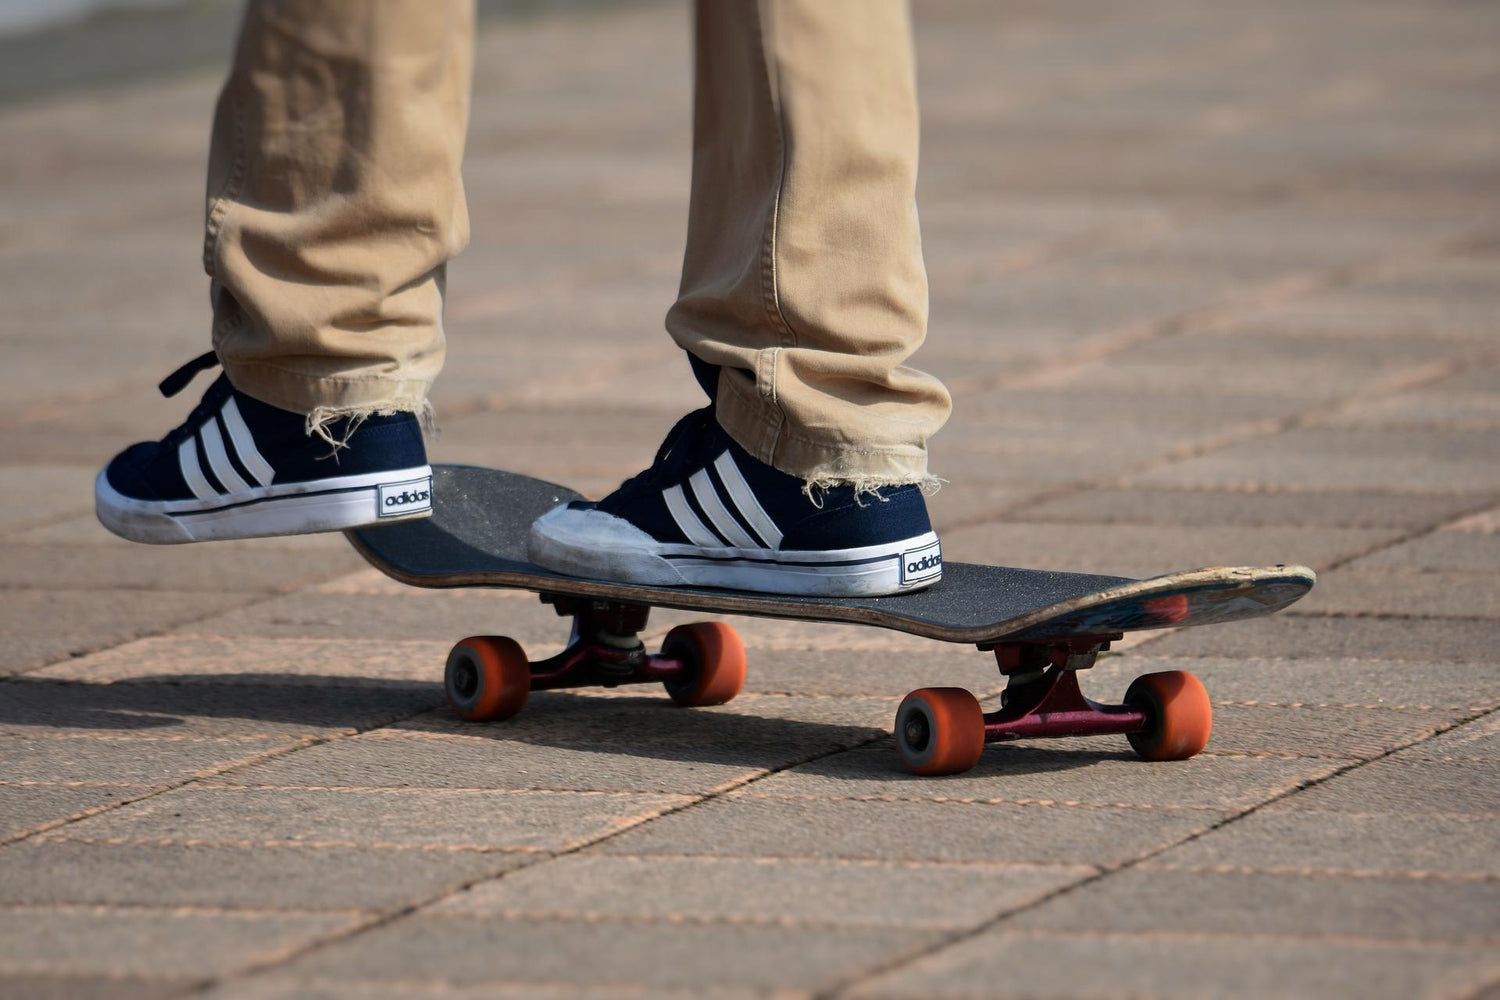 Pushing Mongo On Your Skateboard - Good Or Bad?